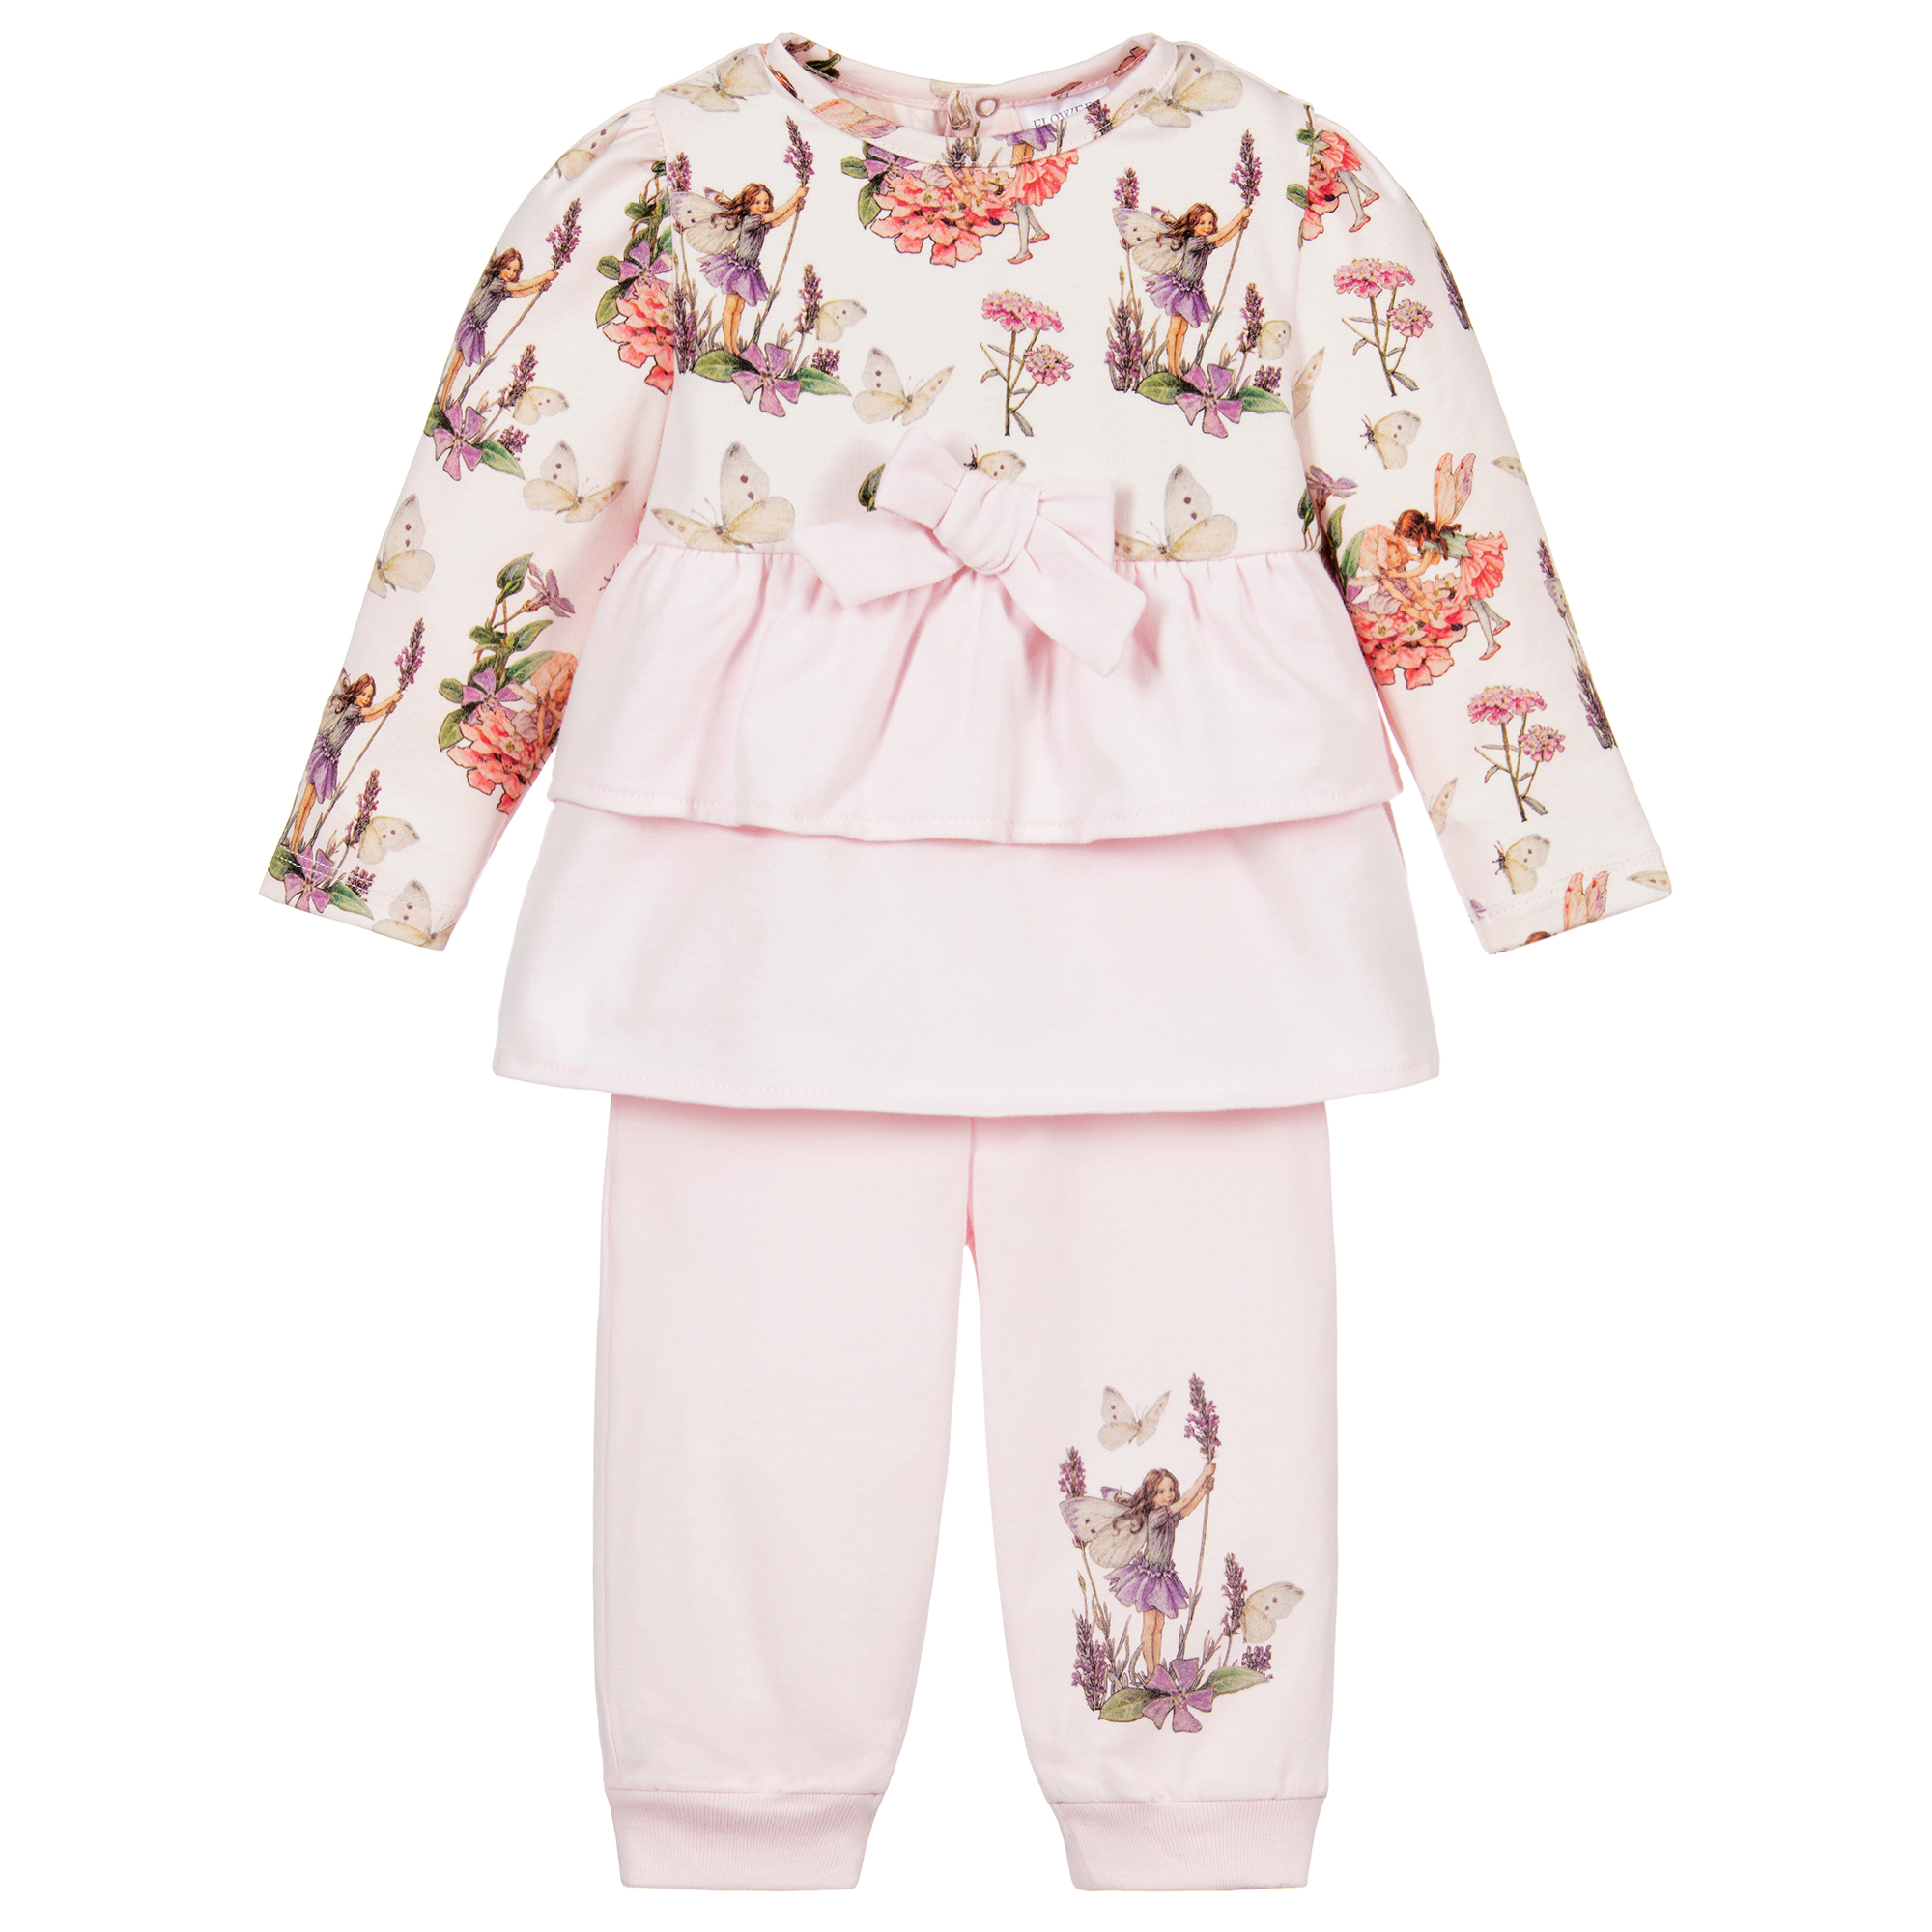 Baby Girls Pyjamas set Fairies Top trousers white pink 1 year 18 months 2 years 